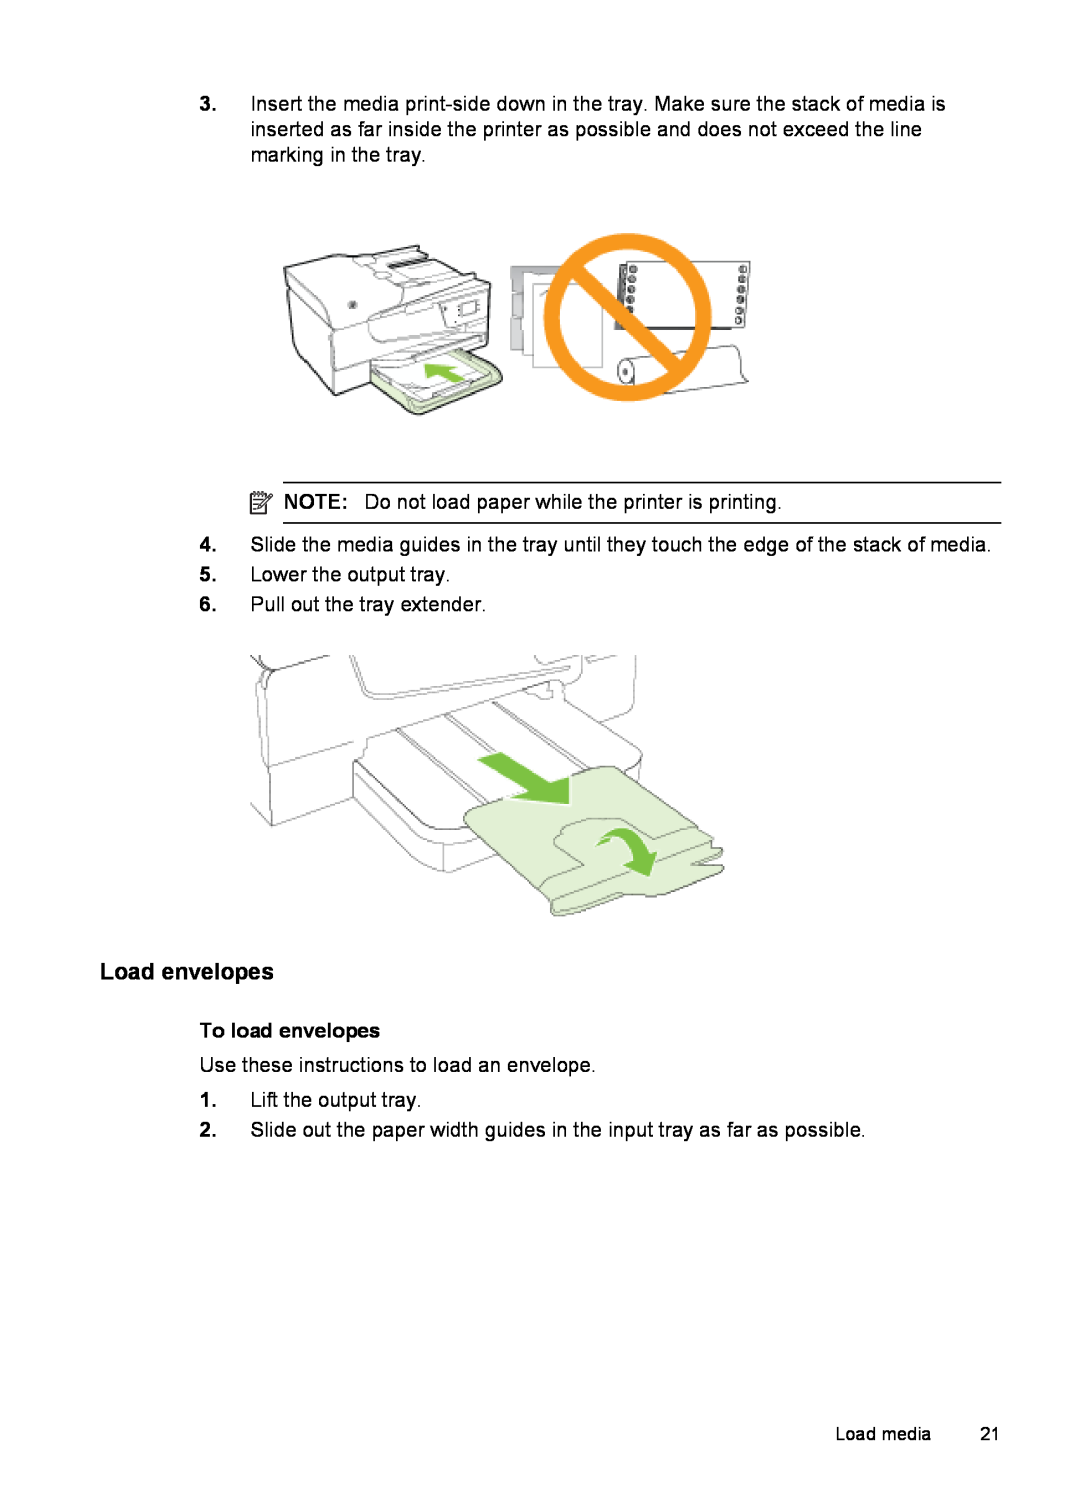 HP 6600 - H7 manual Load envelopes, To load envelopes 